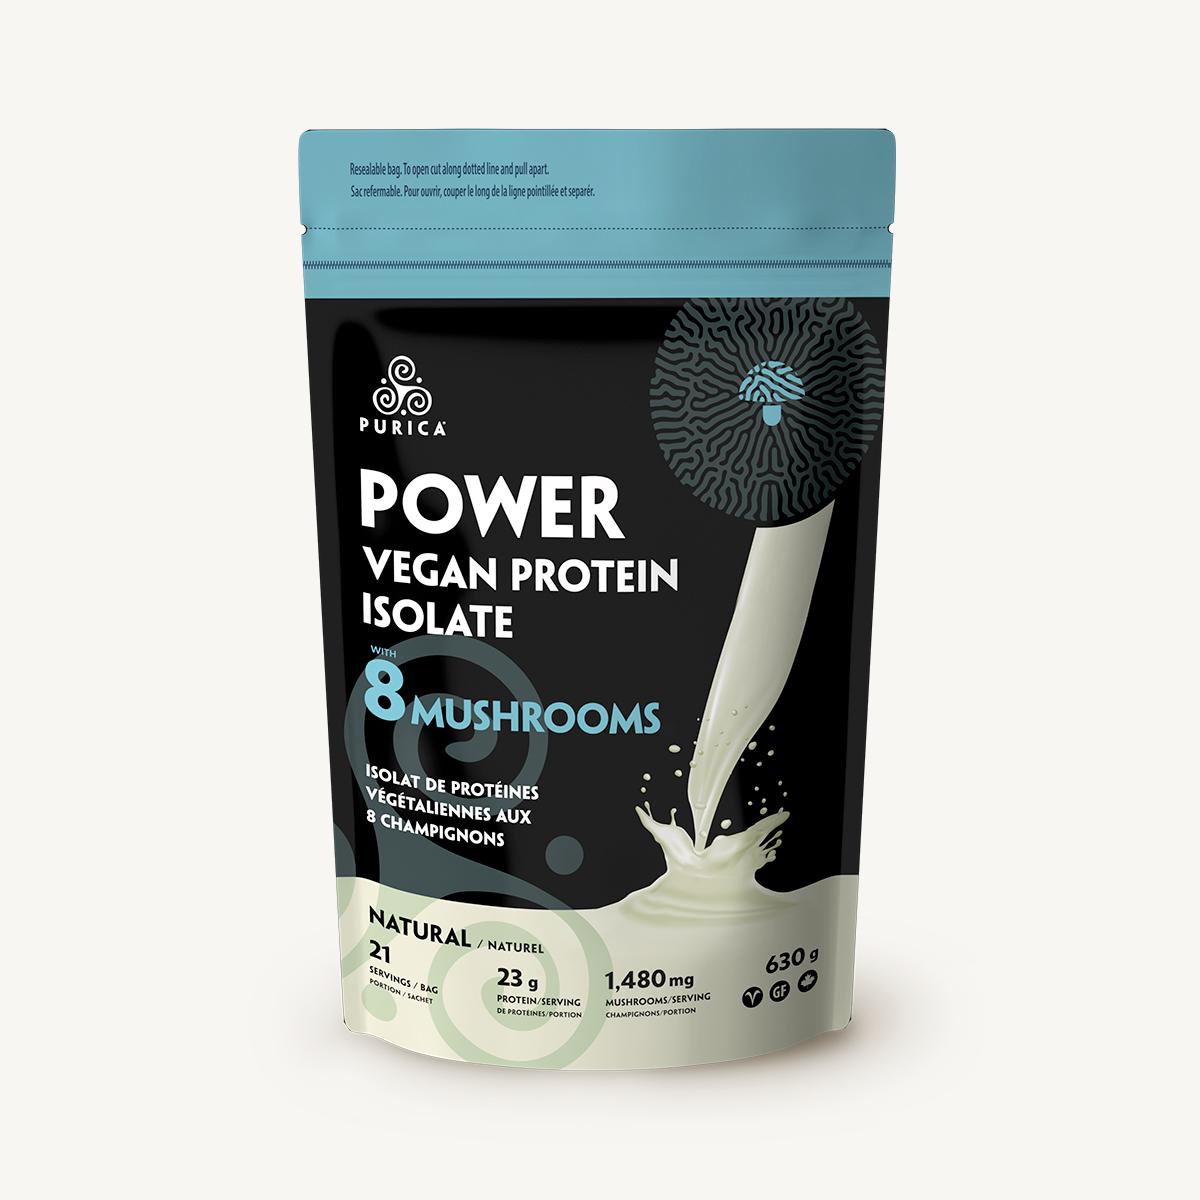 Vegan Protein with 8 Mushrooms